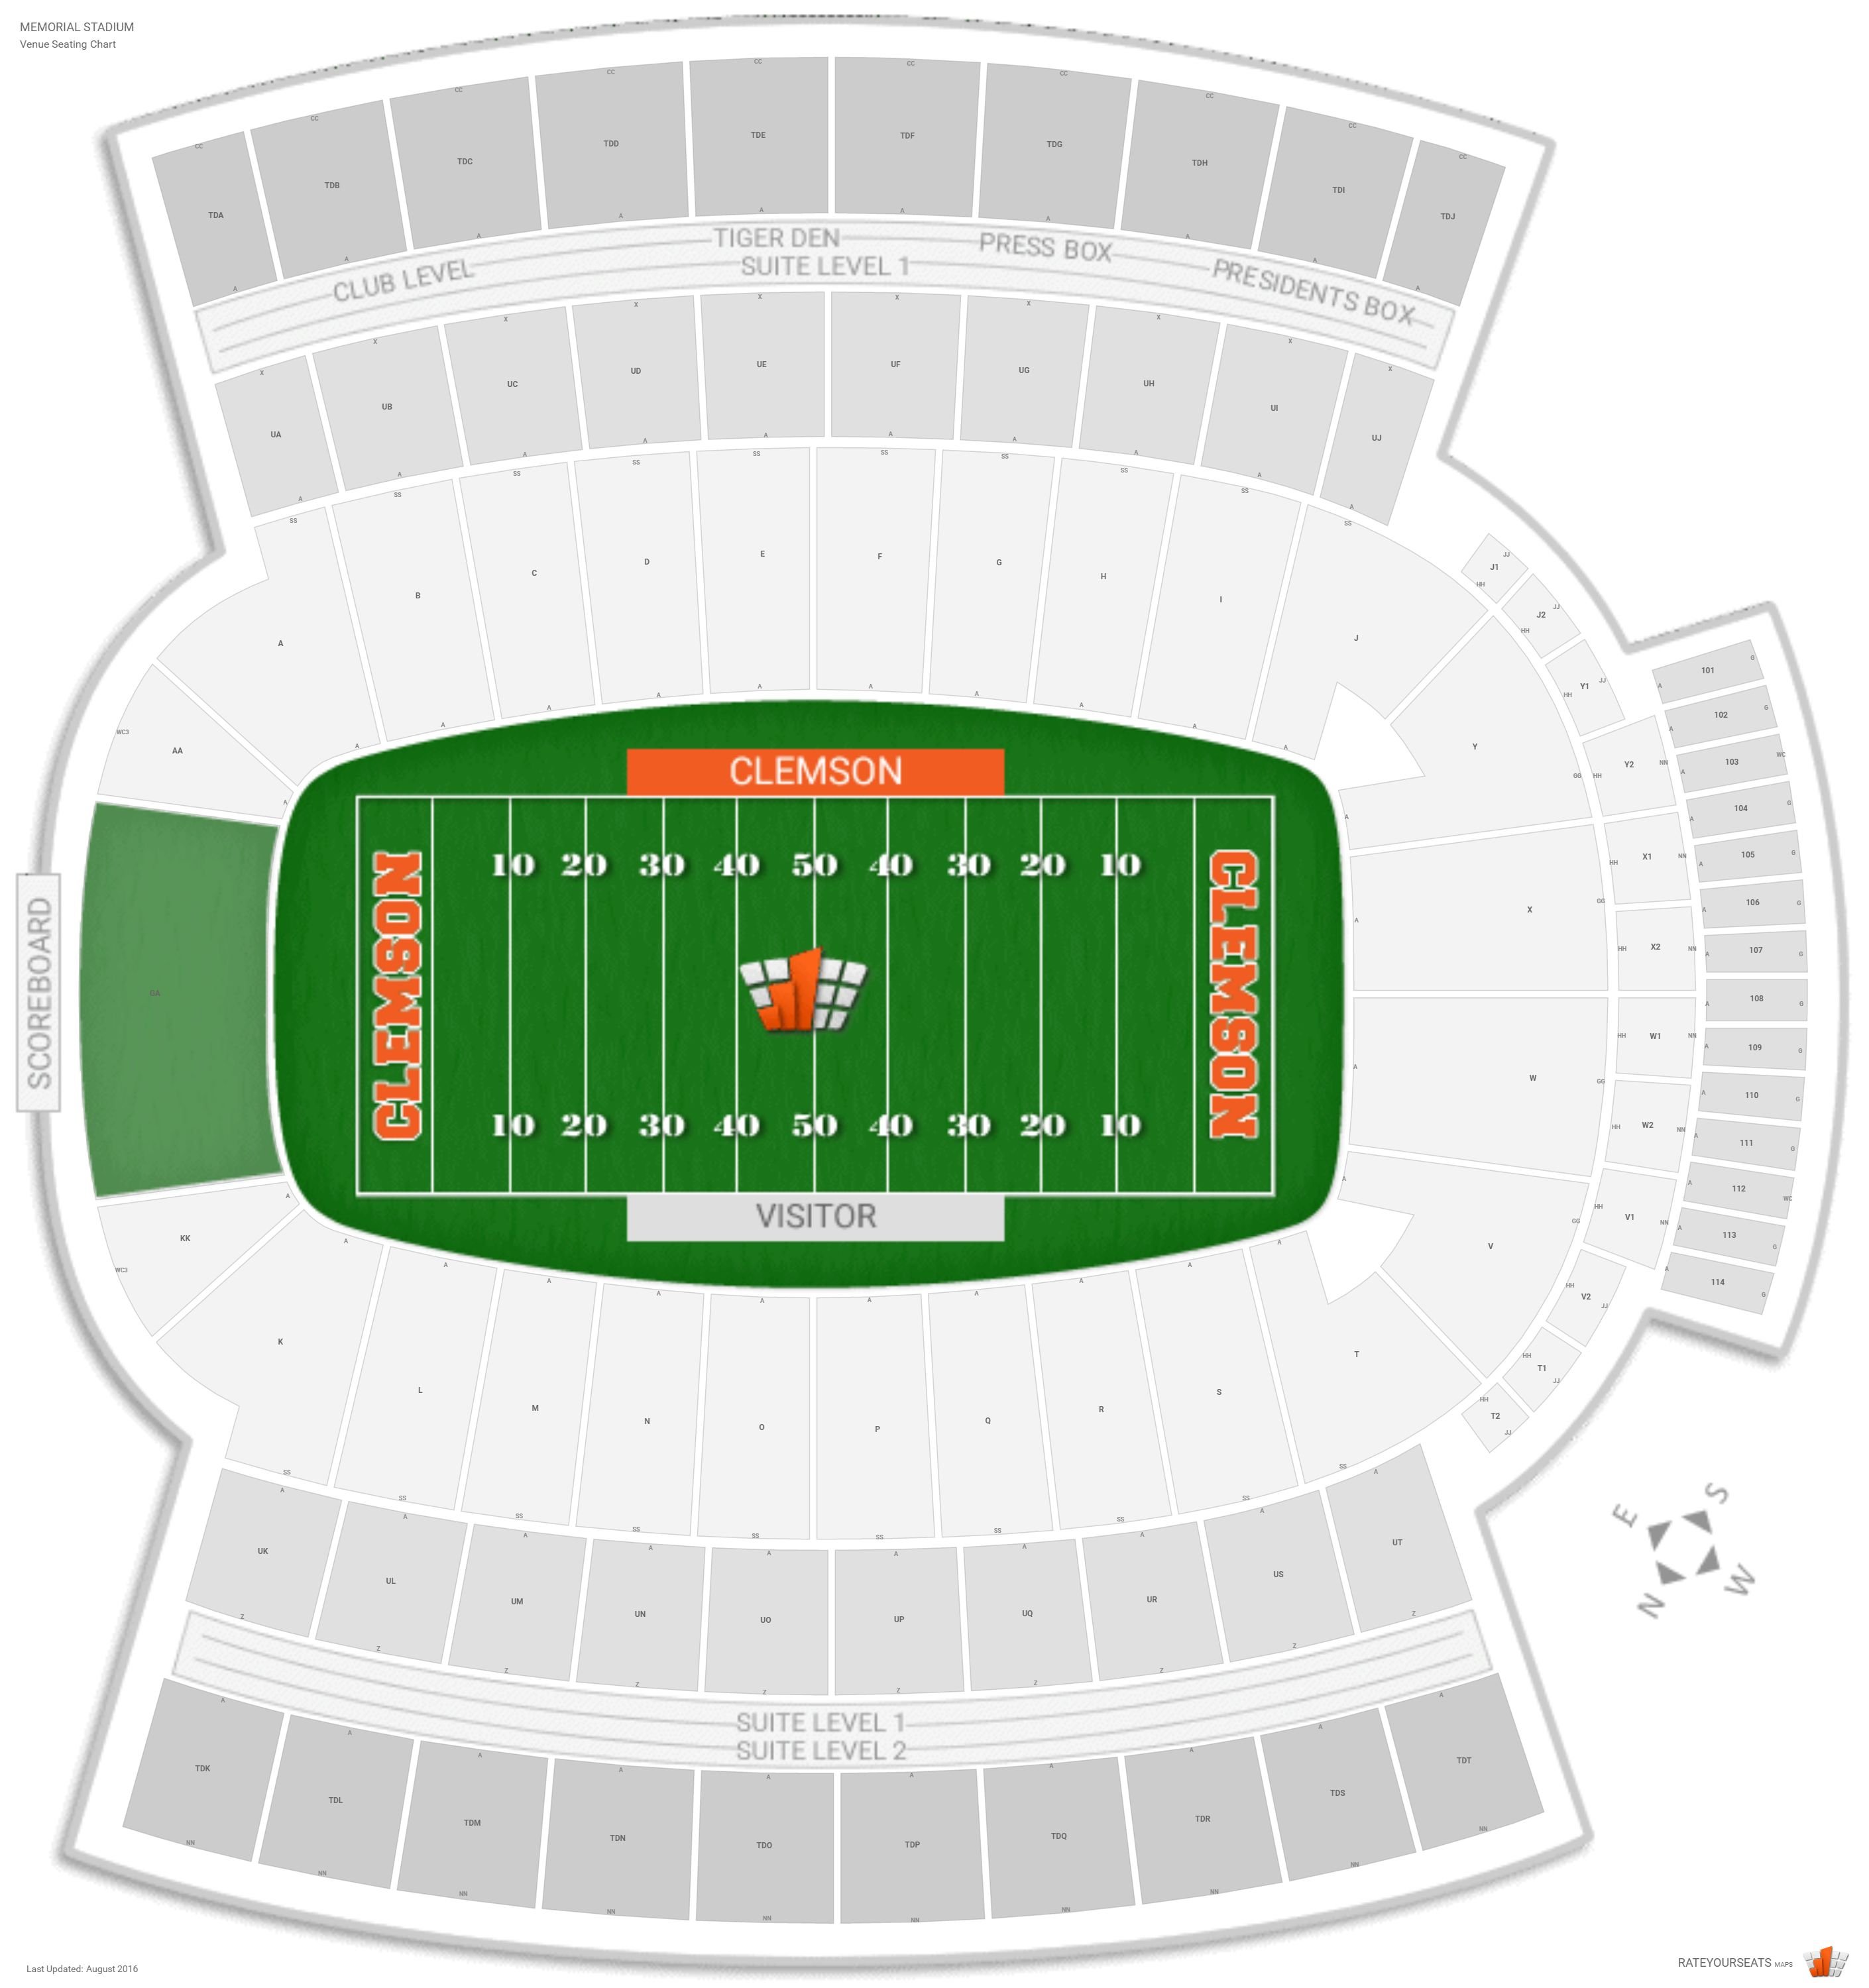 Clemson Memorial Stadium Seating Chart Seat Numbers